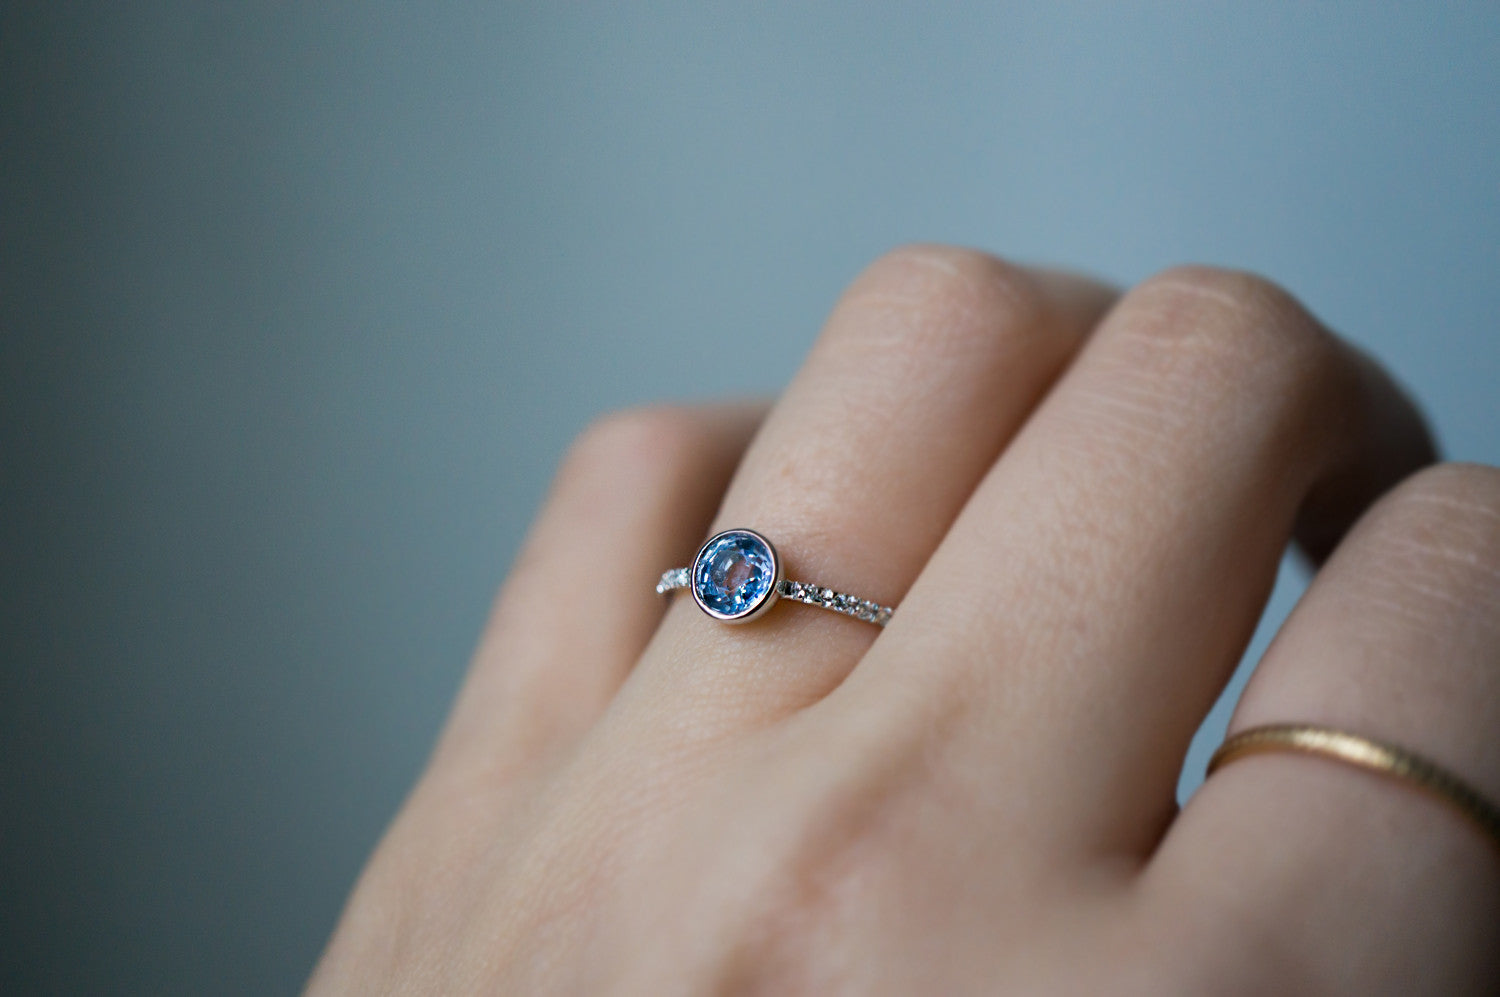 Pale Violet Blue Montana Sapphire Ring - S. Kind & Co